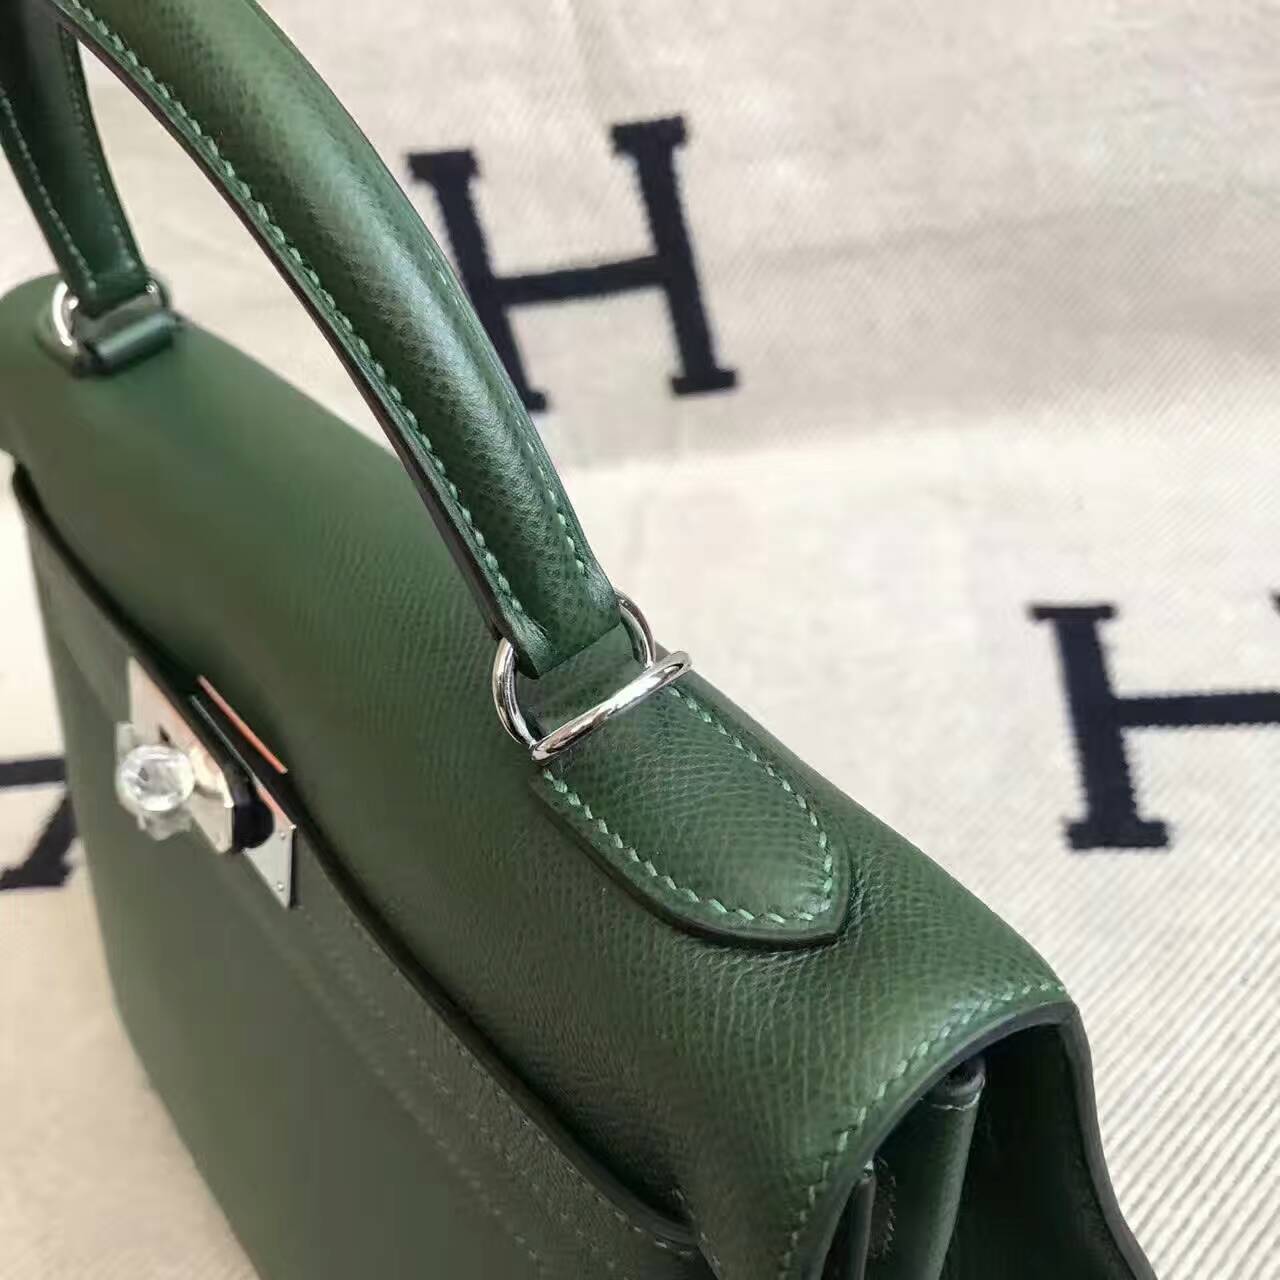 Discount Hermes 2Q English Green Epsom Leather Kelly Bag 32CM